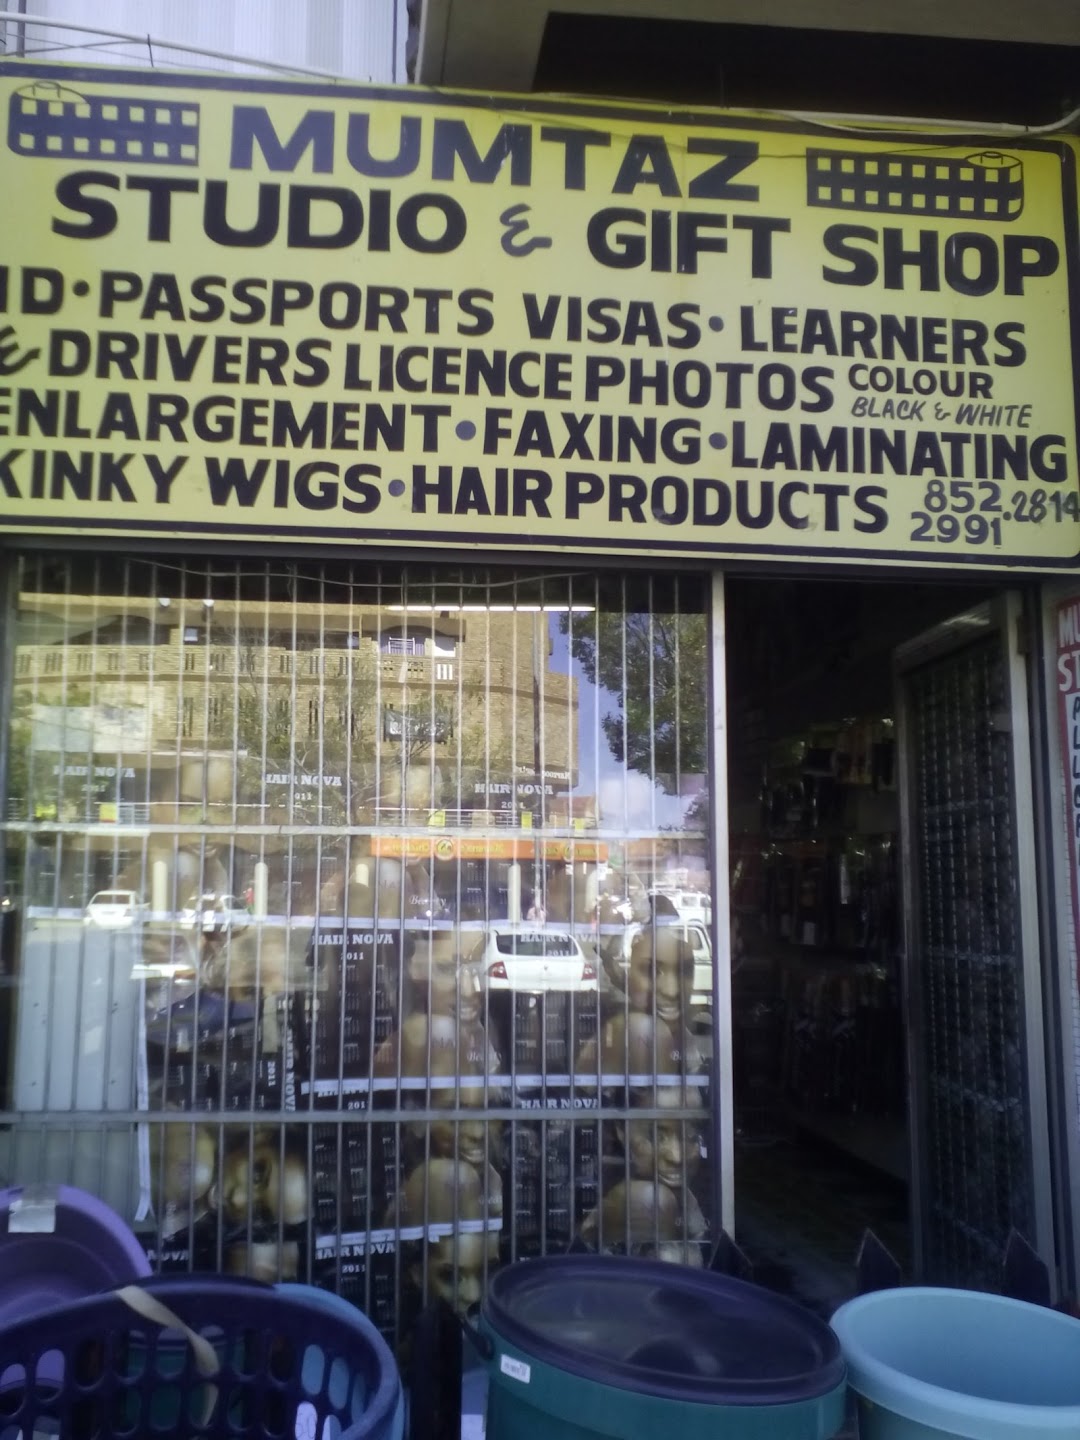 Mumtaz Studio & Gift Shop